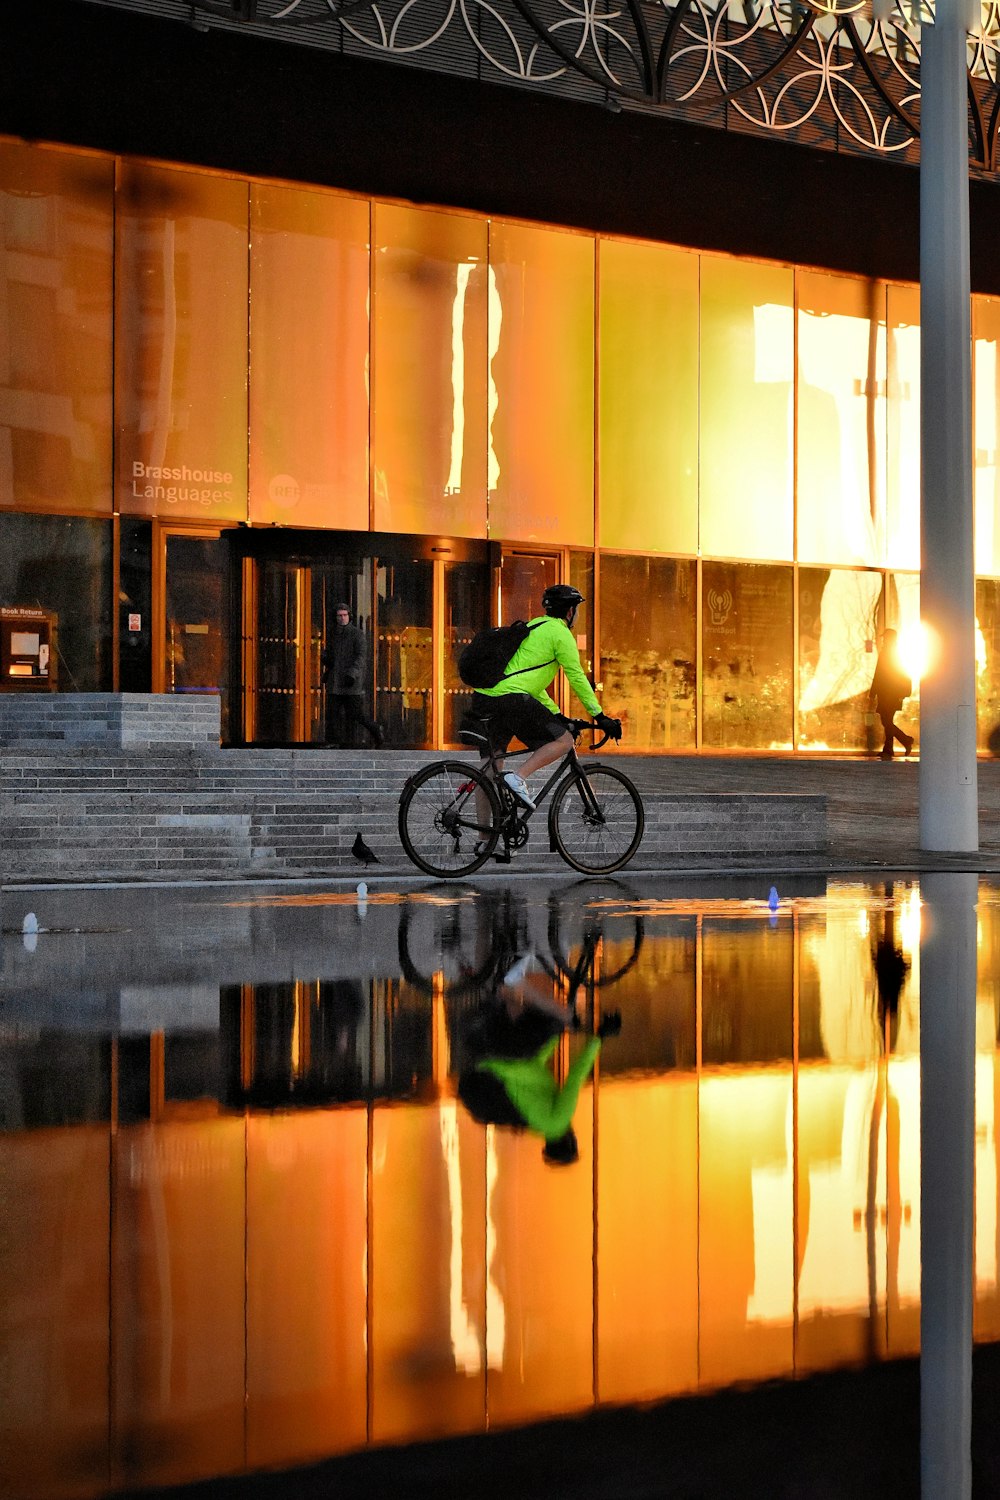 man in green jacket riding bicycle